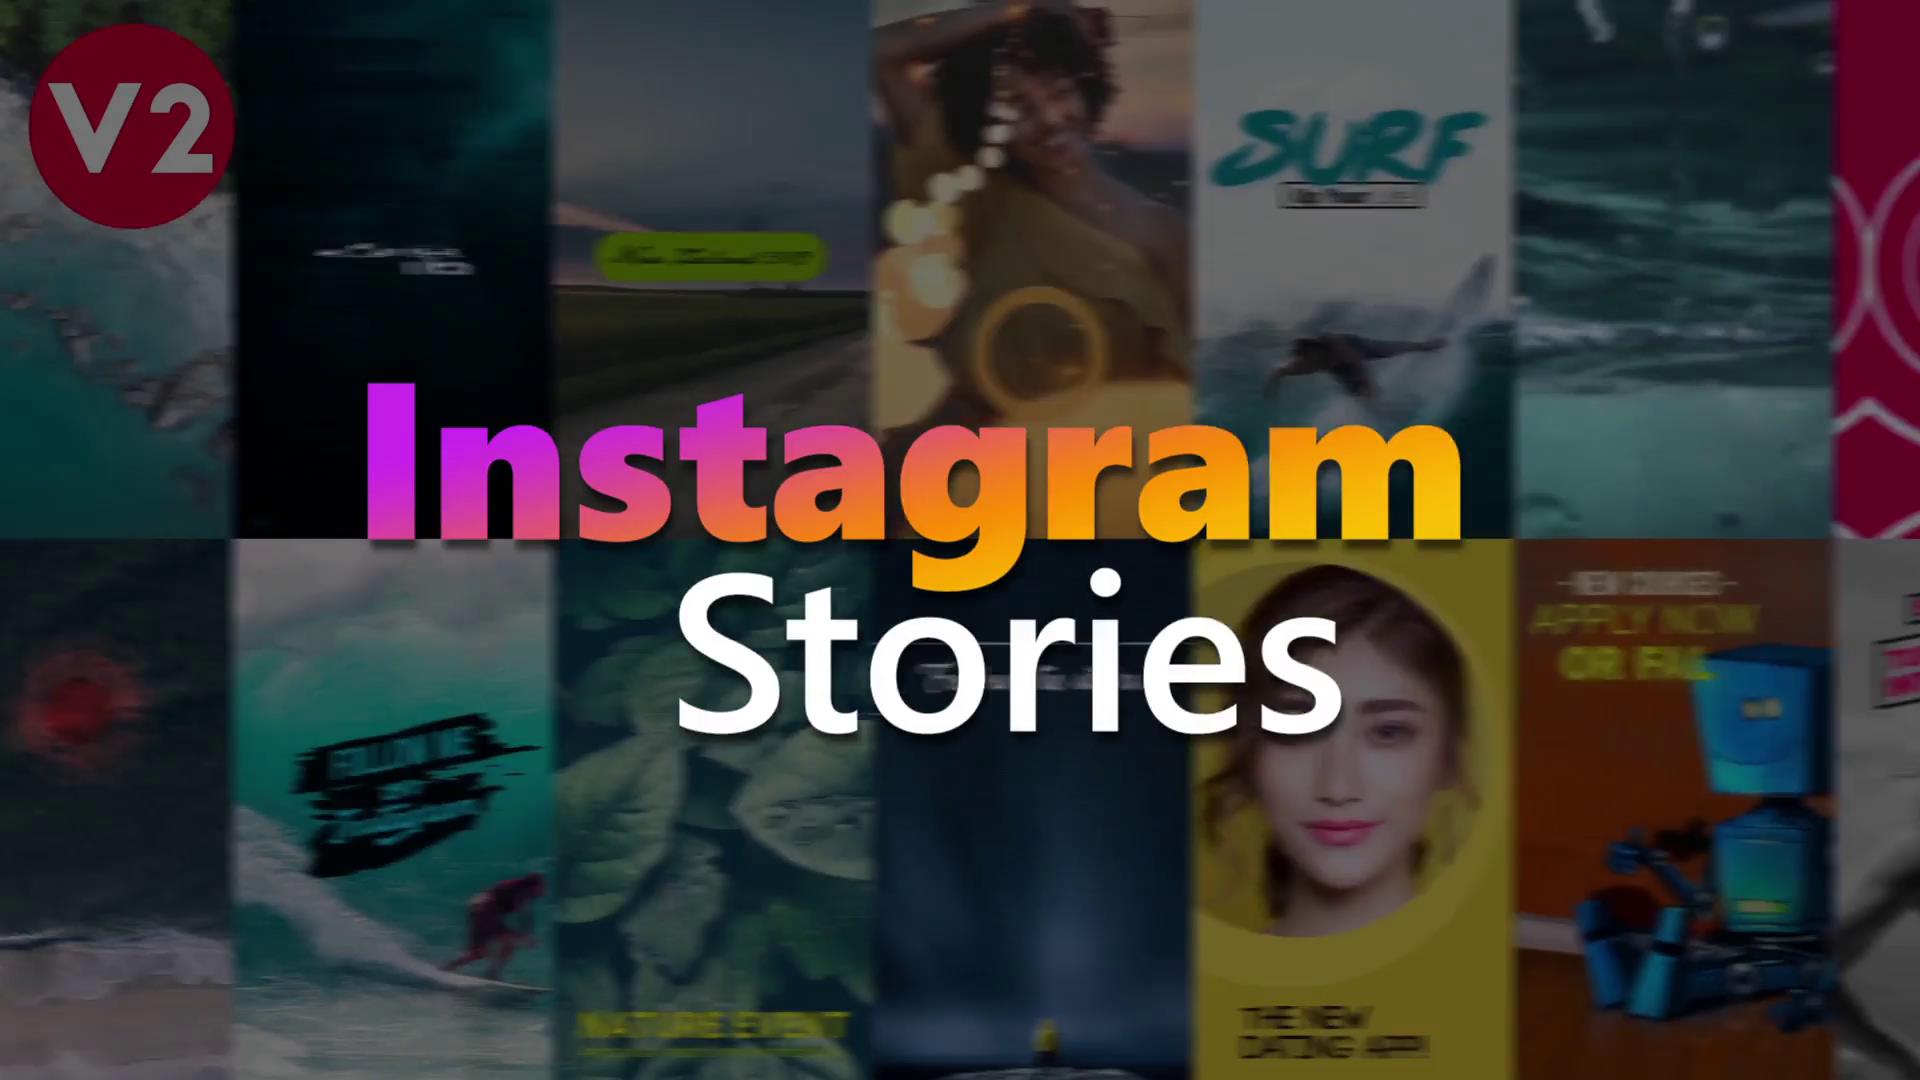 AE模板-INS网络视频时尚宣传包装 Instagram Stories V2抖音快手手机竖屏模板 AE模版-竖版视频-第1张